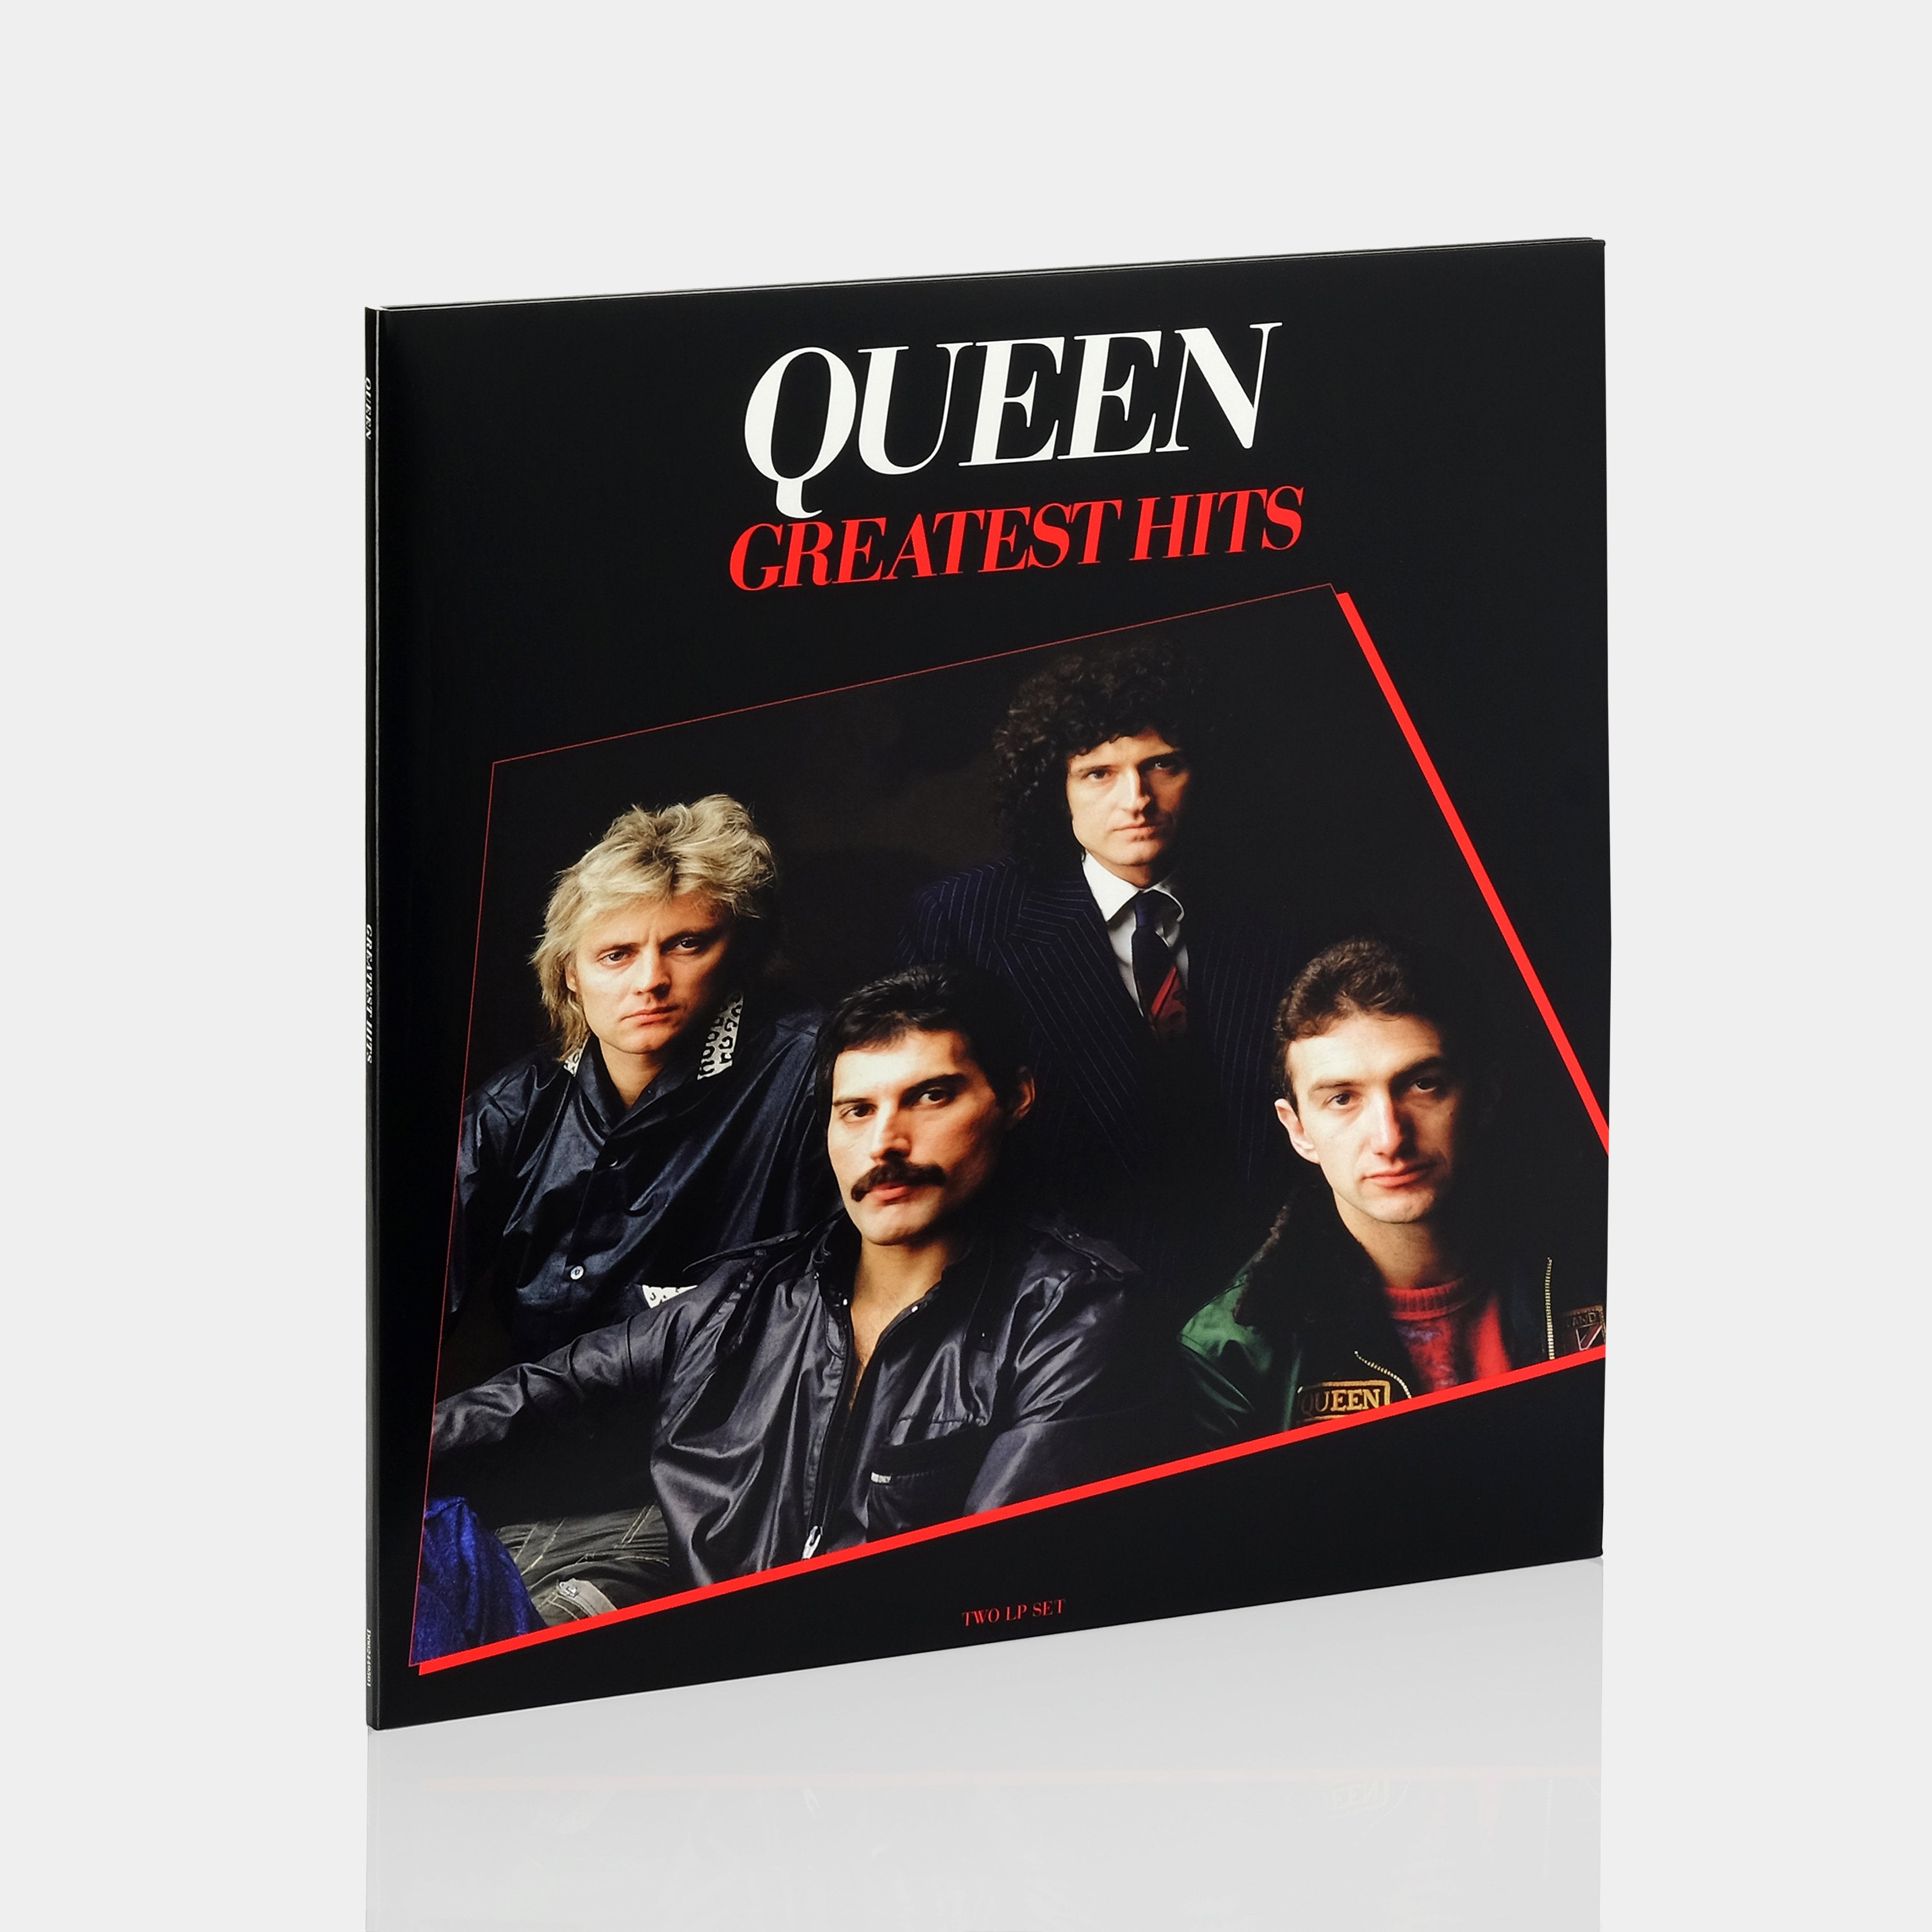 Queen - Greatest Hits 2xLP Vinyl Record